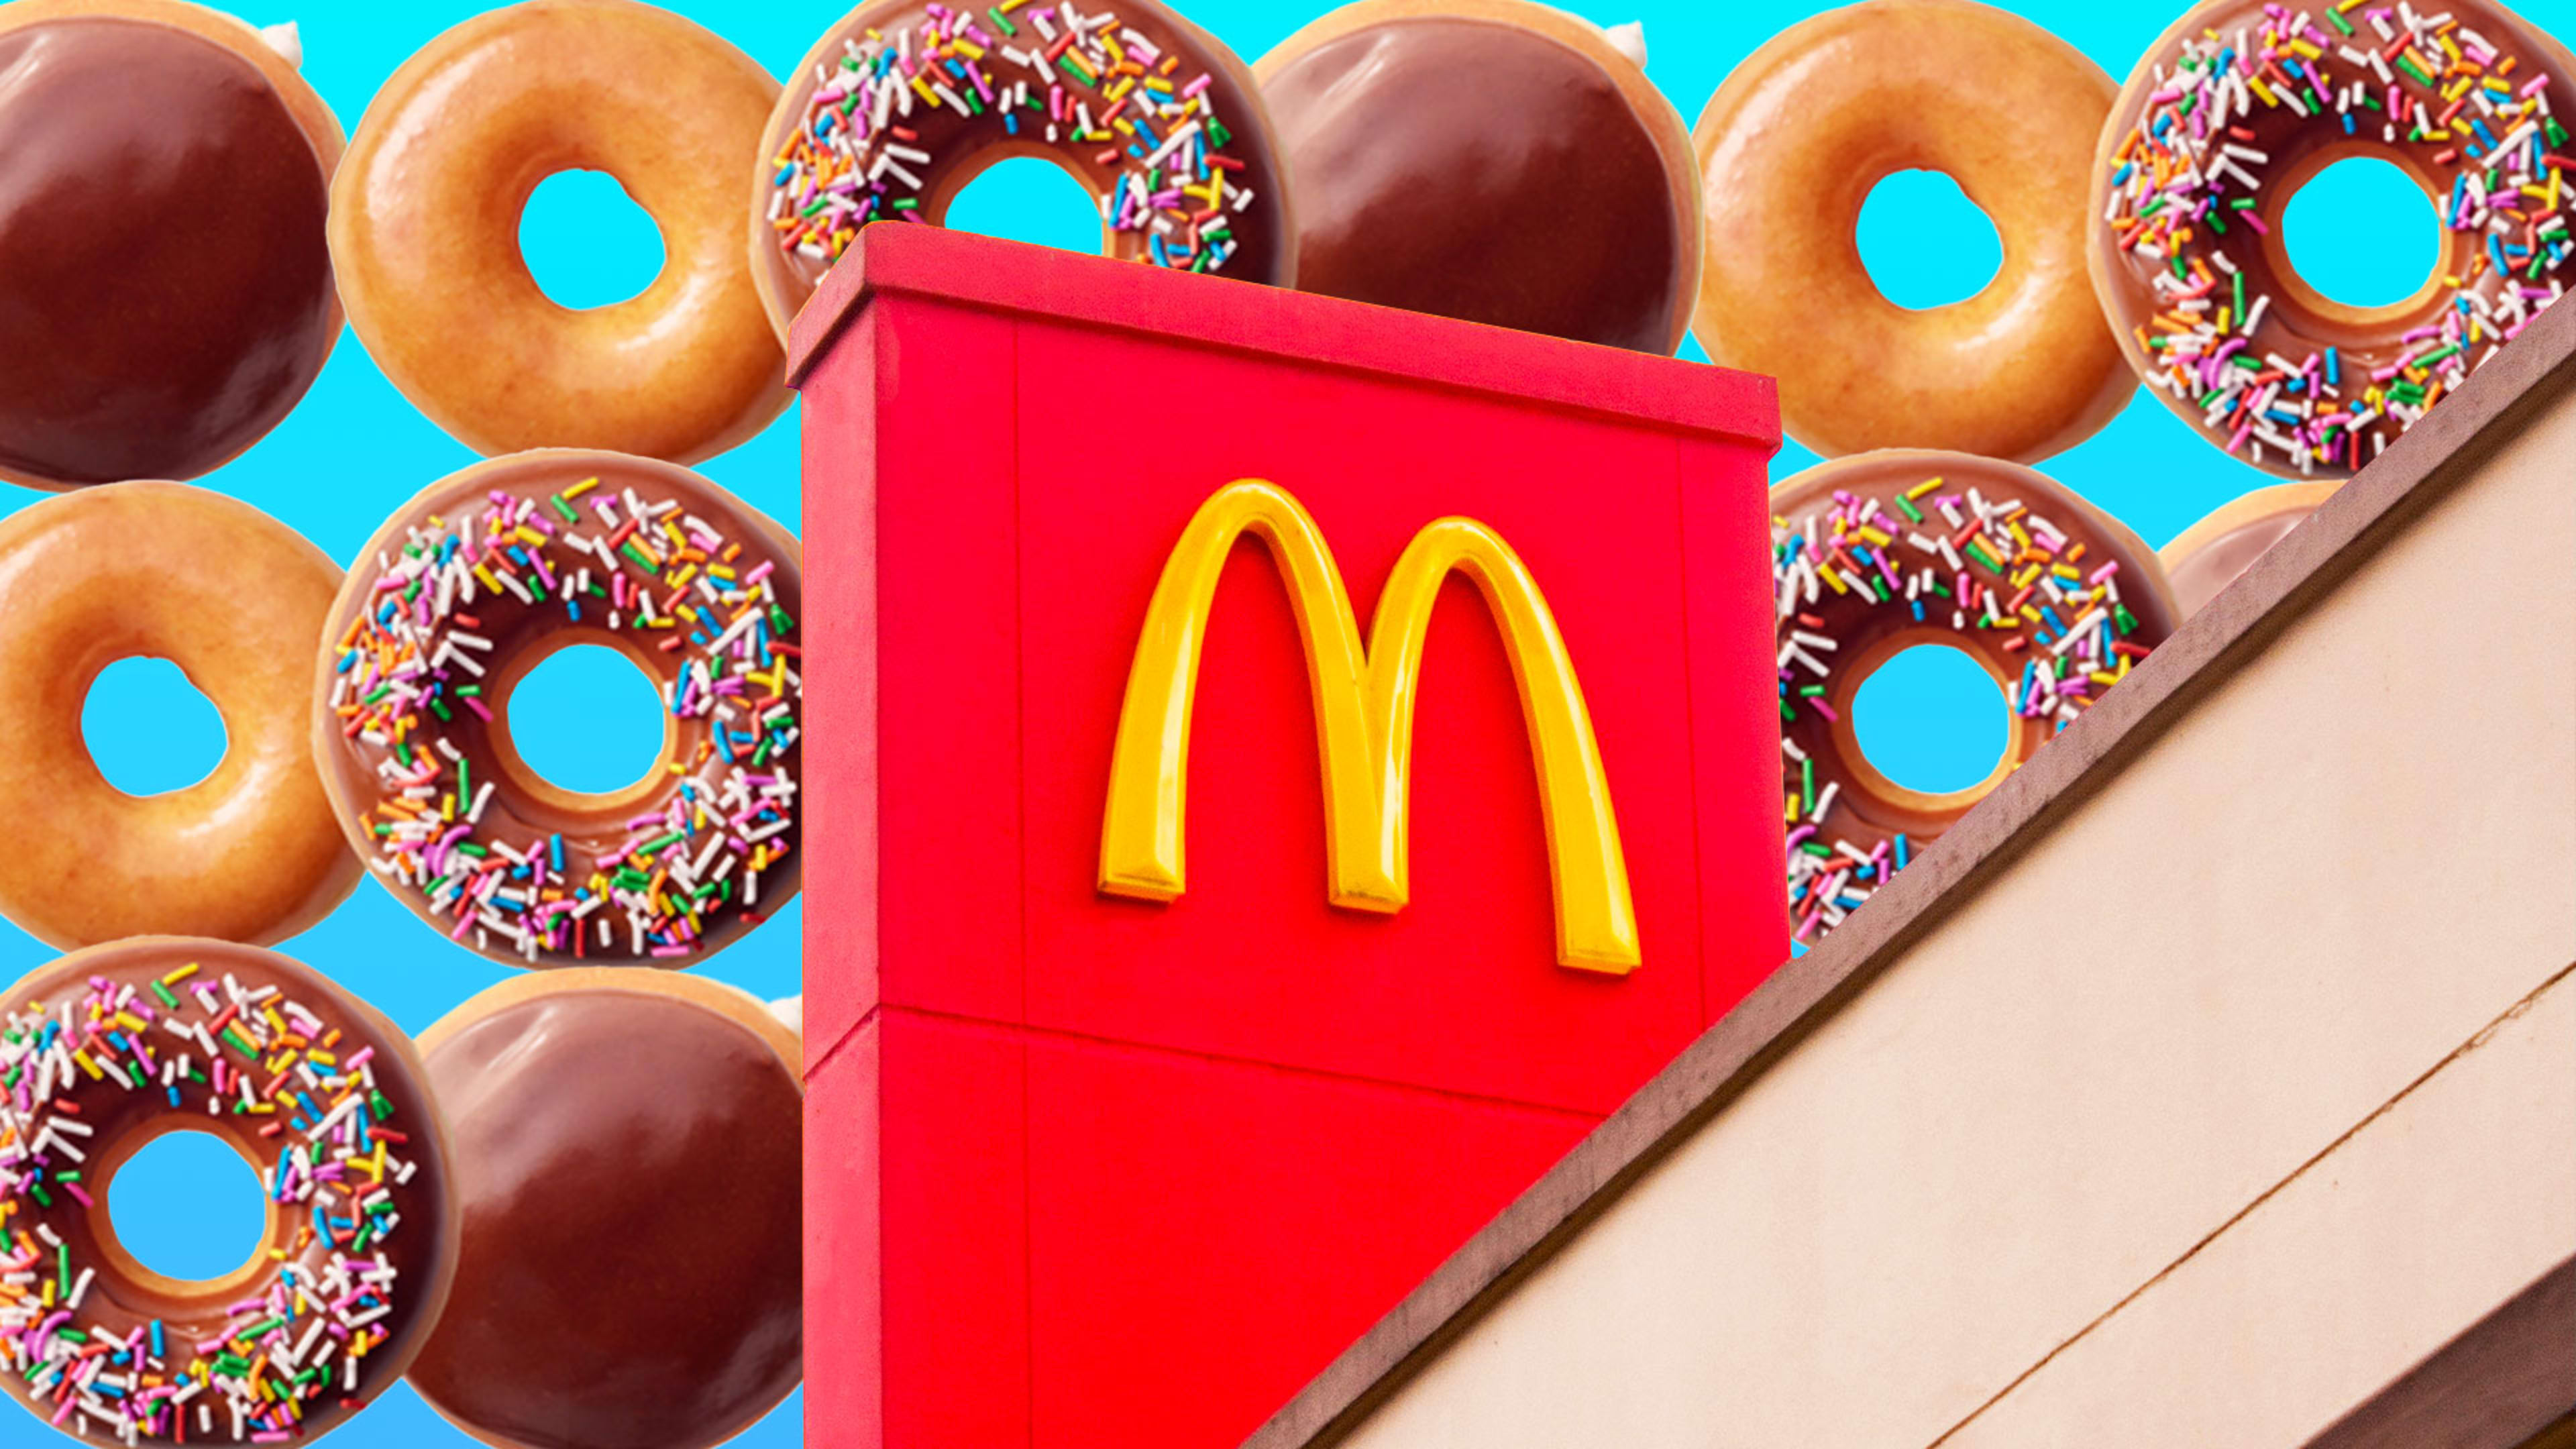 Krispy Kreme’s stock price proves the market-moving power of McDonald’s